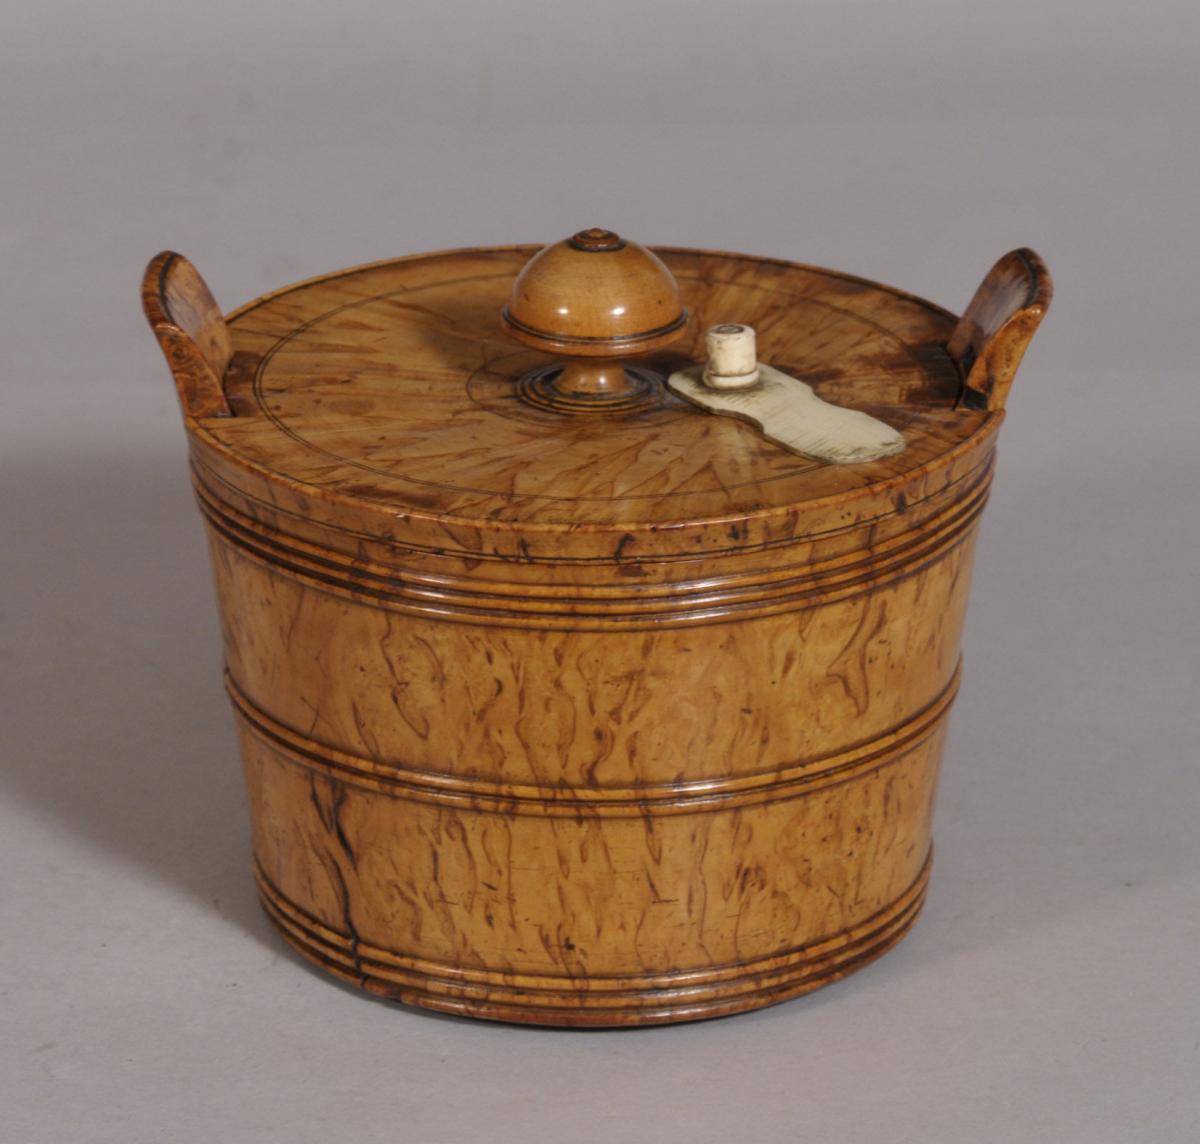 S/3534 Antique Treen 19th Century Masur Birch Butter Bowl